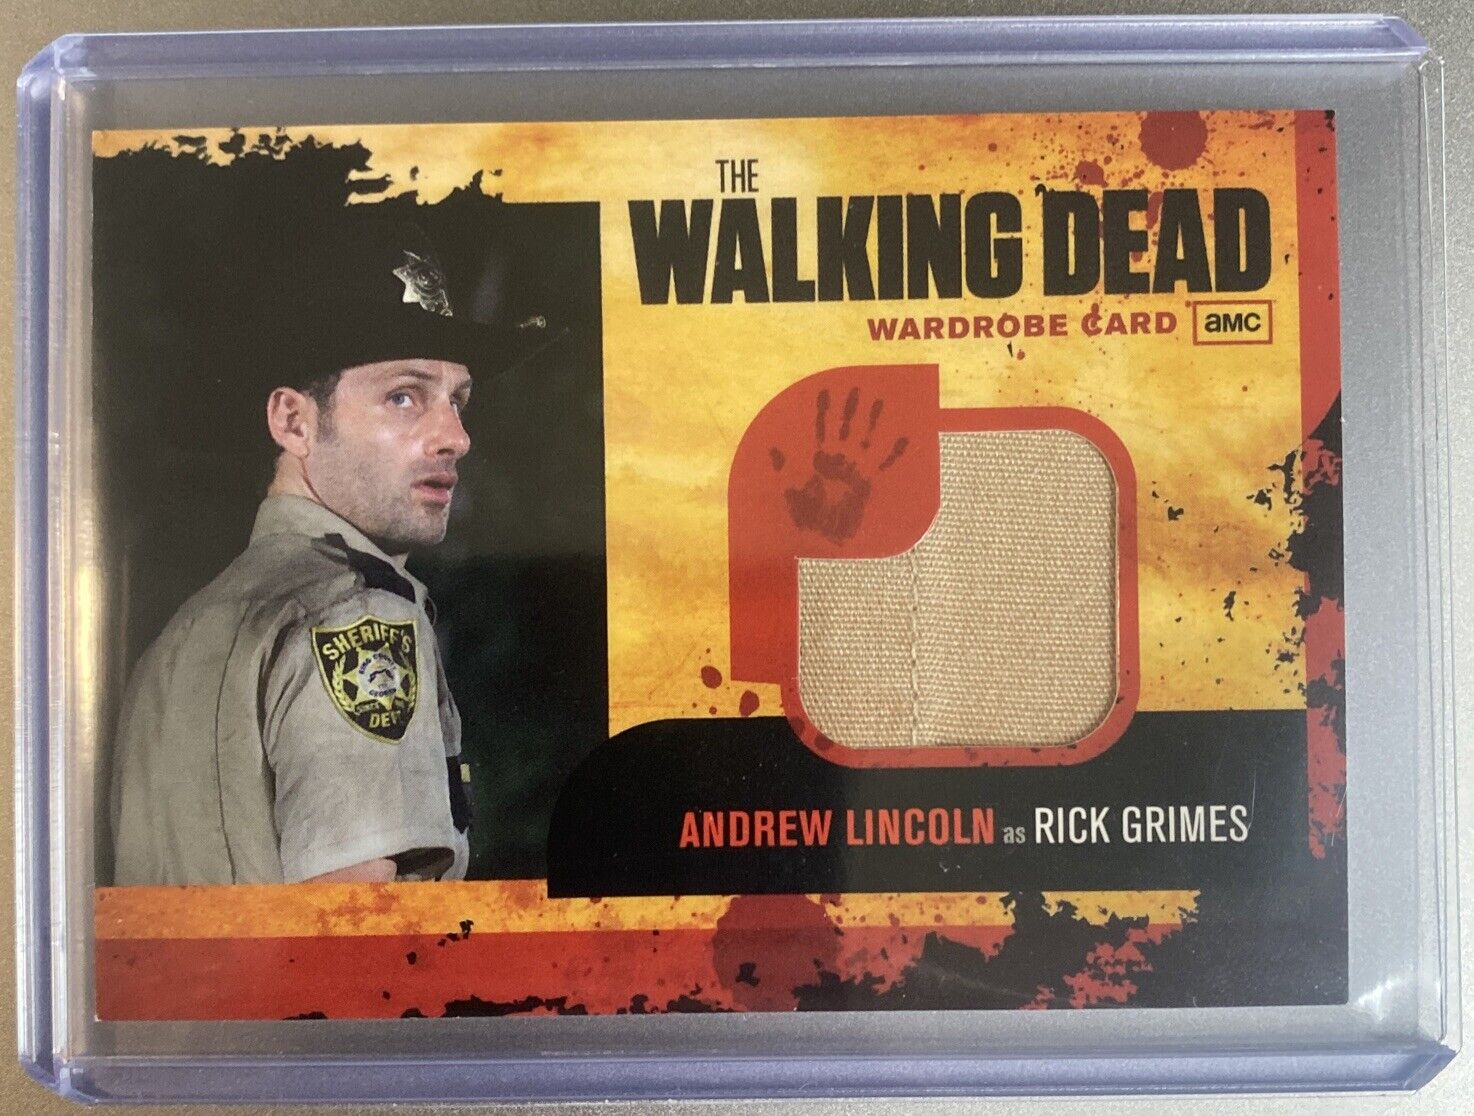 The Walking Dead Season 1 Wardrobe Card M1 Andrew Lincoln as Rick Grimes